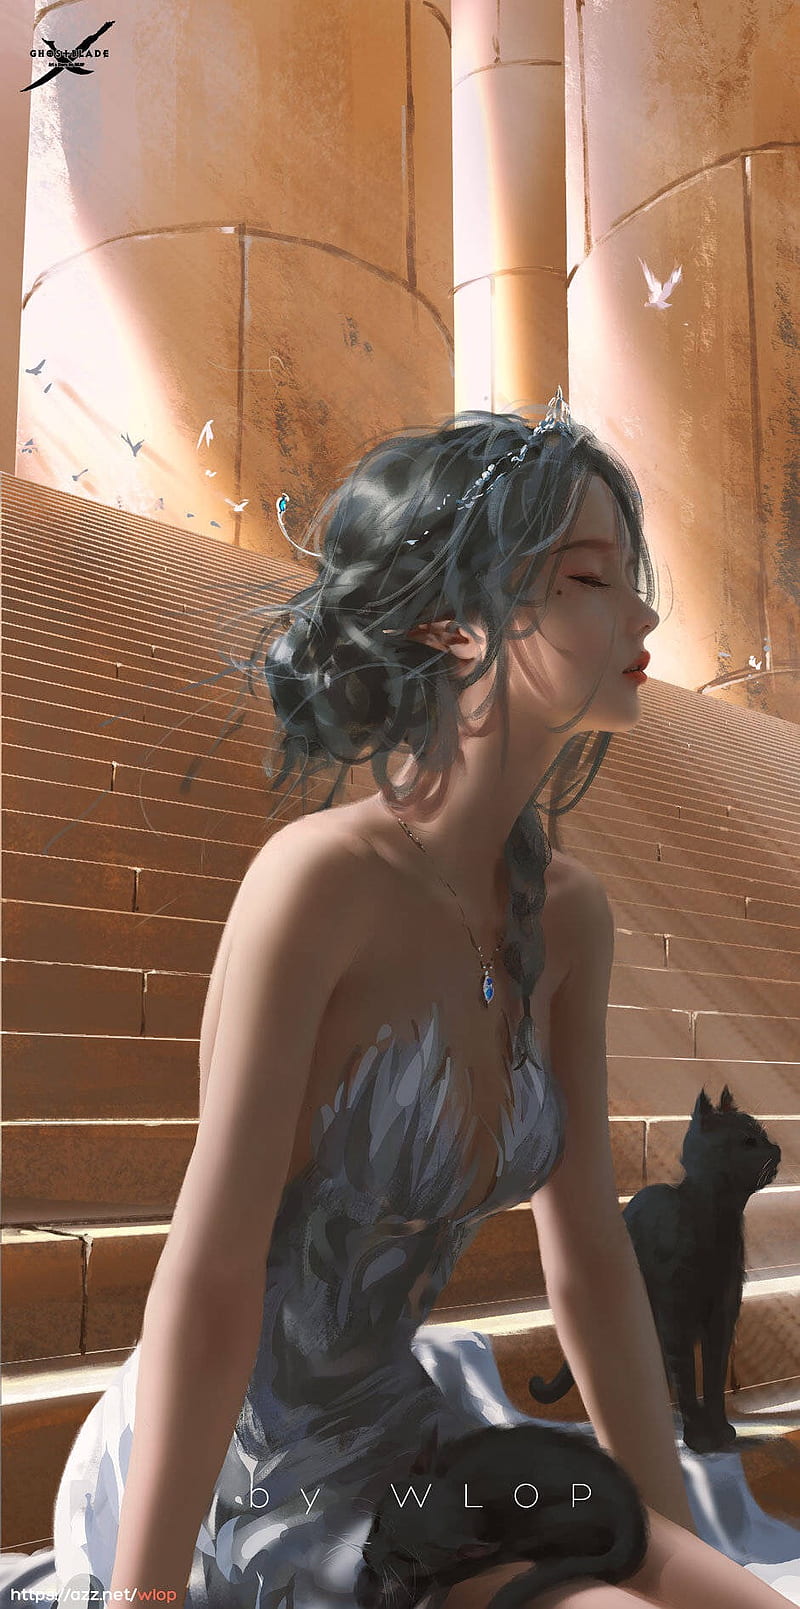 Wlop Cats Braided Hair Silver Hair Stairs White Dress Fantasy Girl Fantasy Art Hd Mobile Wallpaper Peakpx